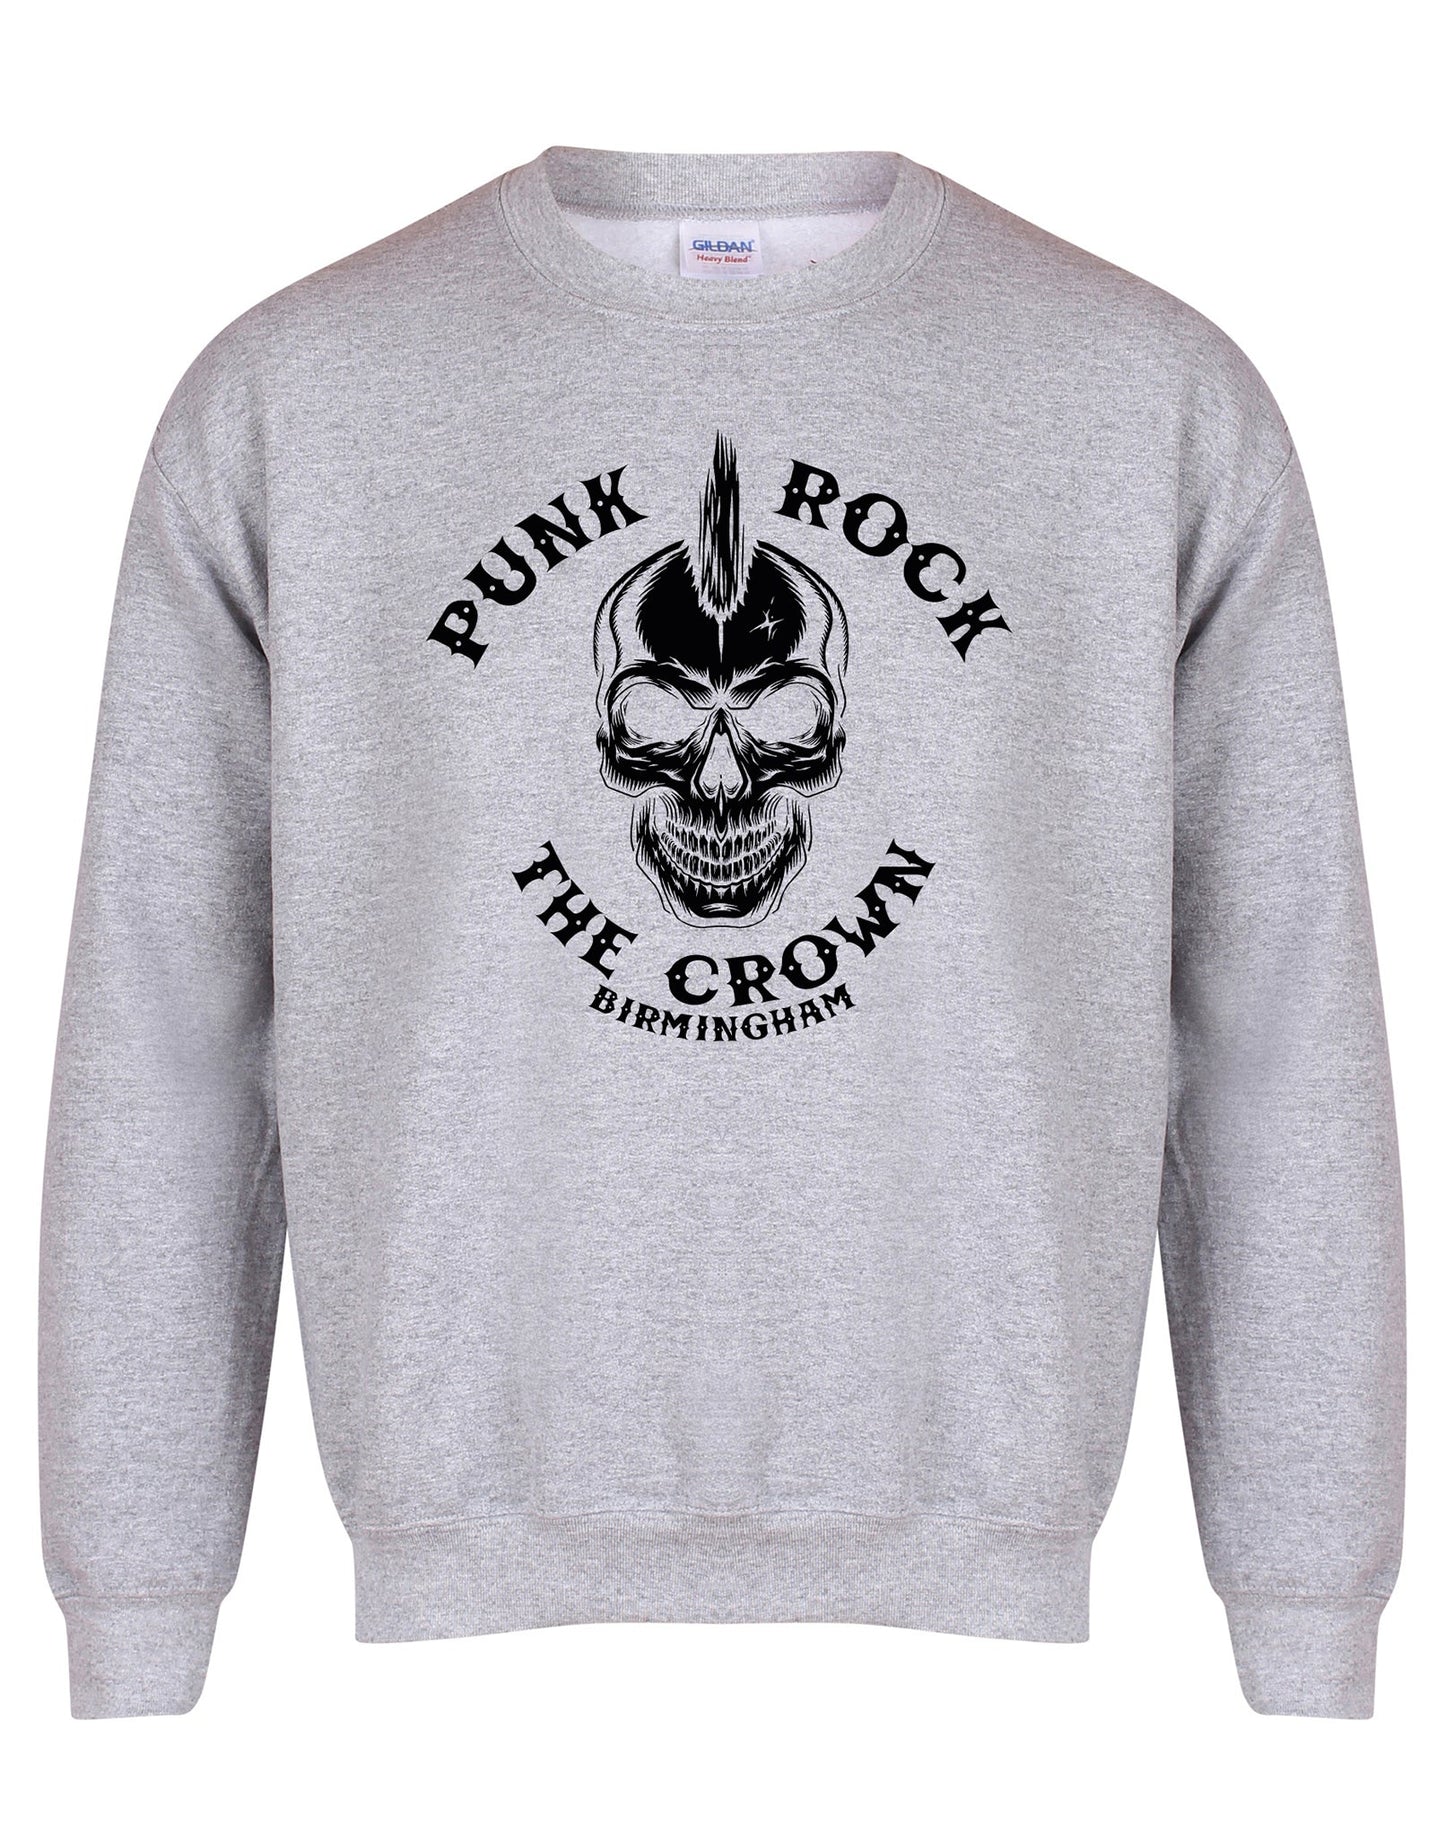 The Crown - punk rock - unisex fit sweatshirt - various colours - Dirty Stop Outs